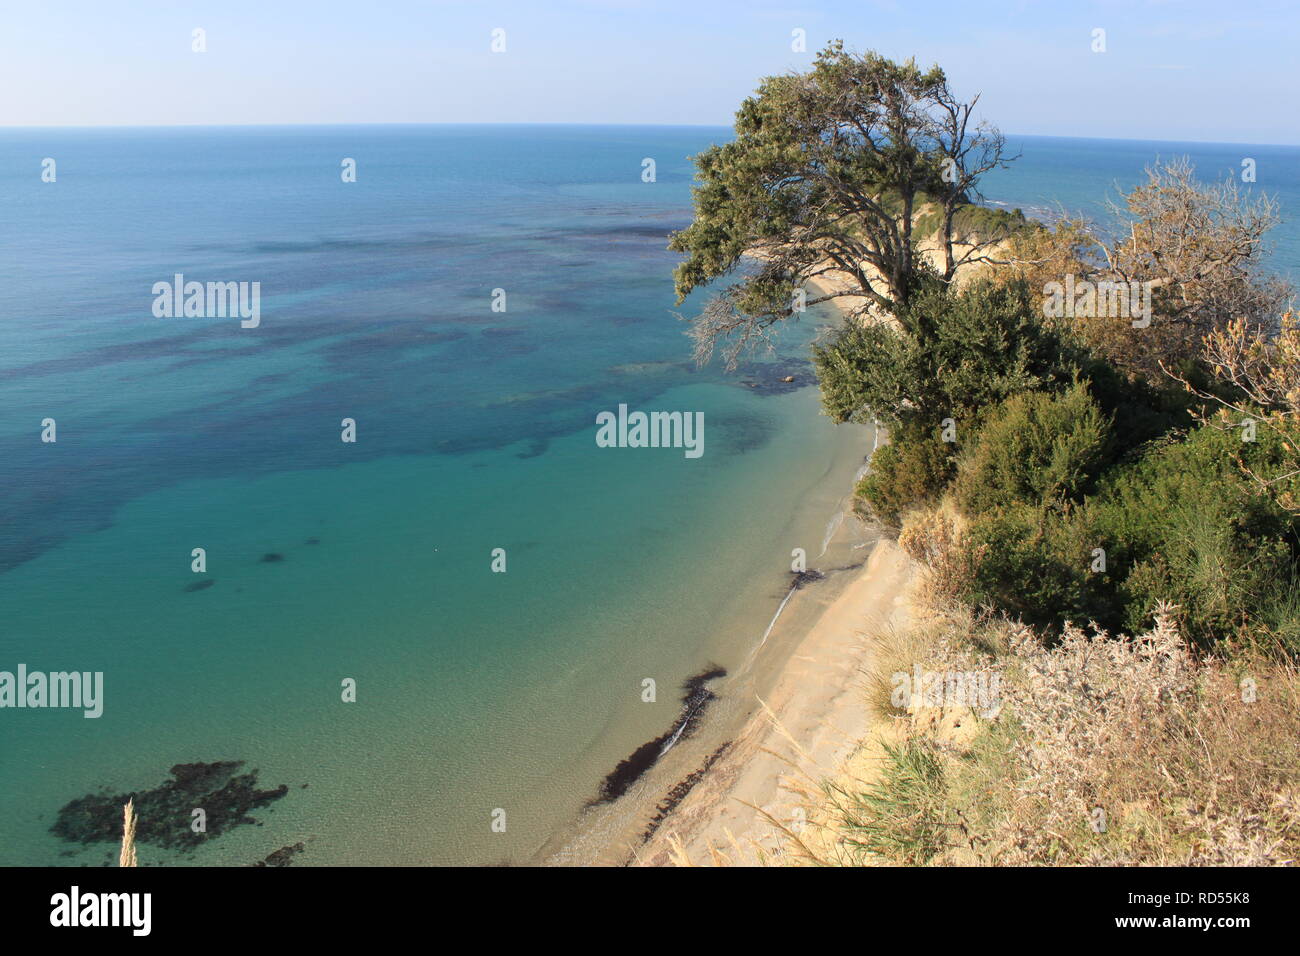 Marine protected area in Albania Stock Photo